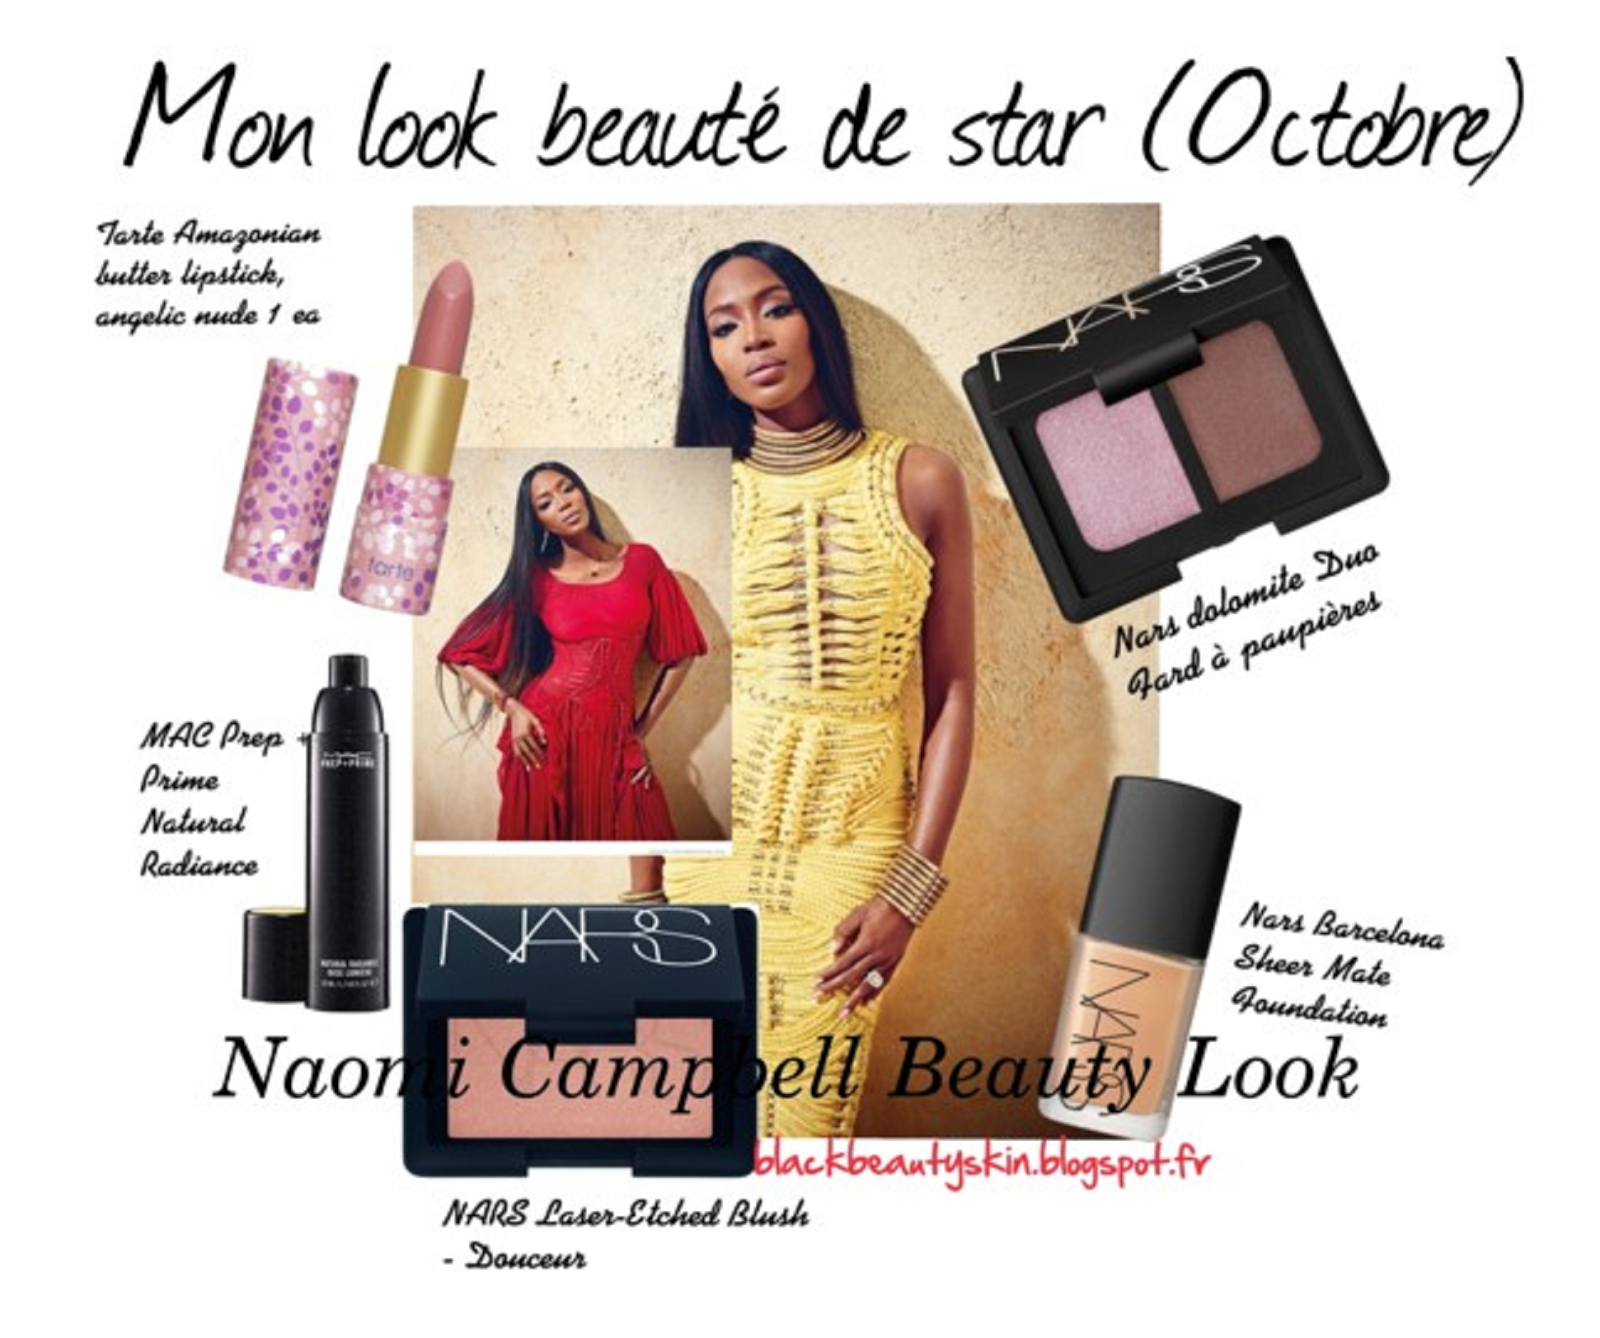 Naomi Campbell, aars, mac cosmetics, beauté, stars